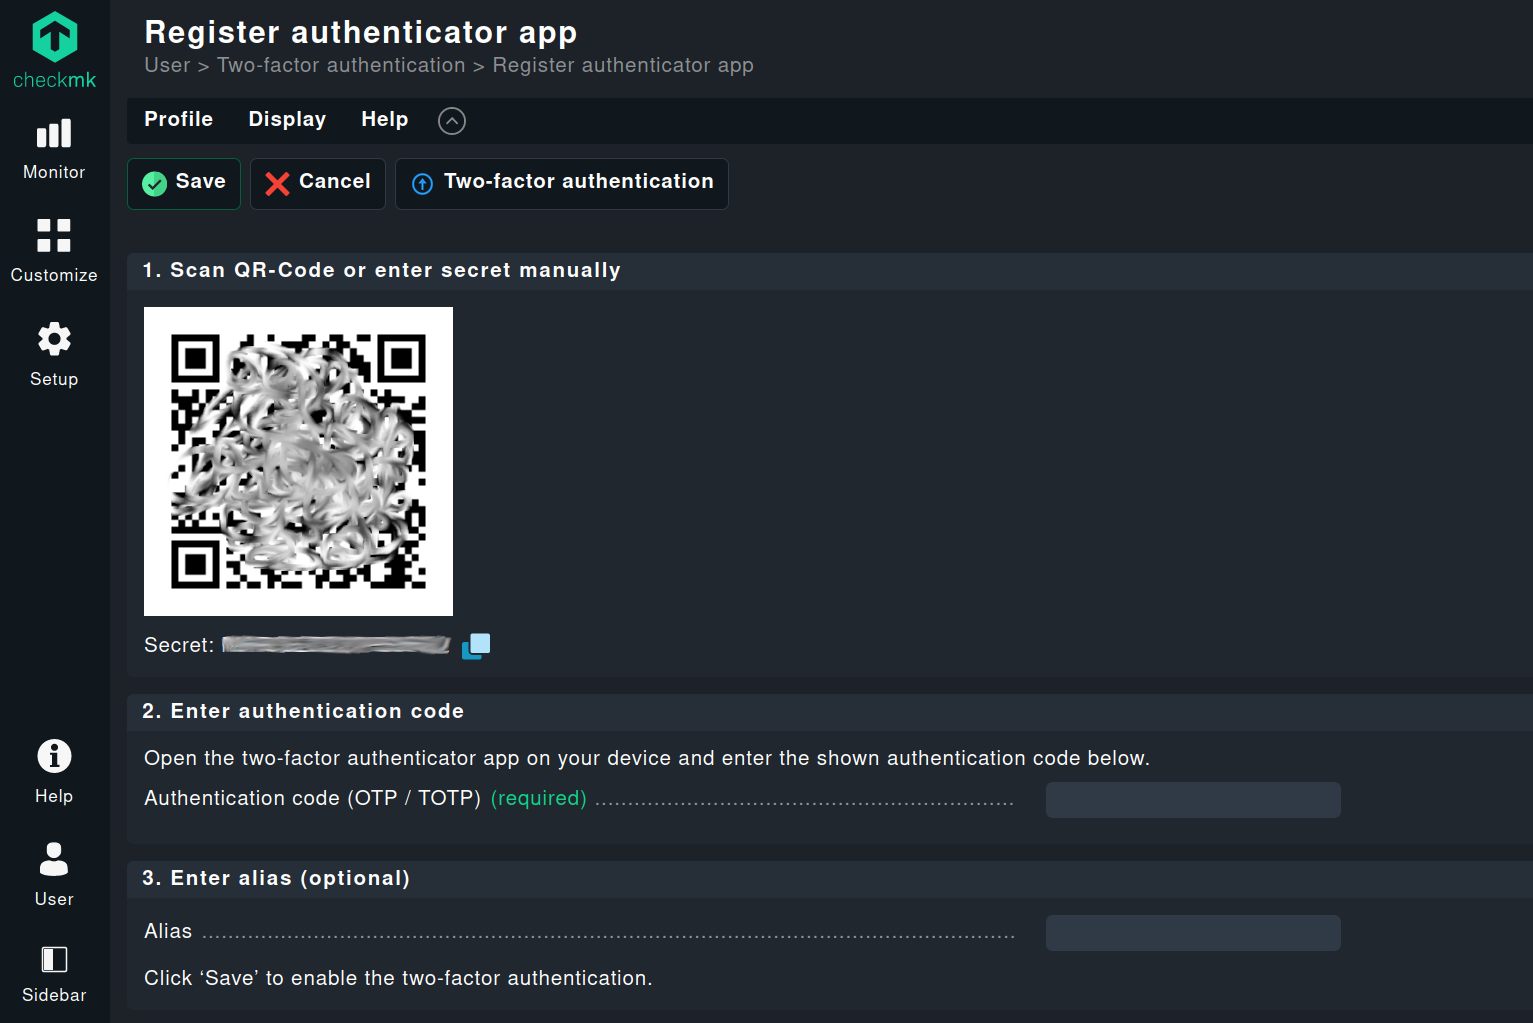 Configuration of authenticator app in Checkmk